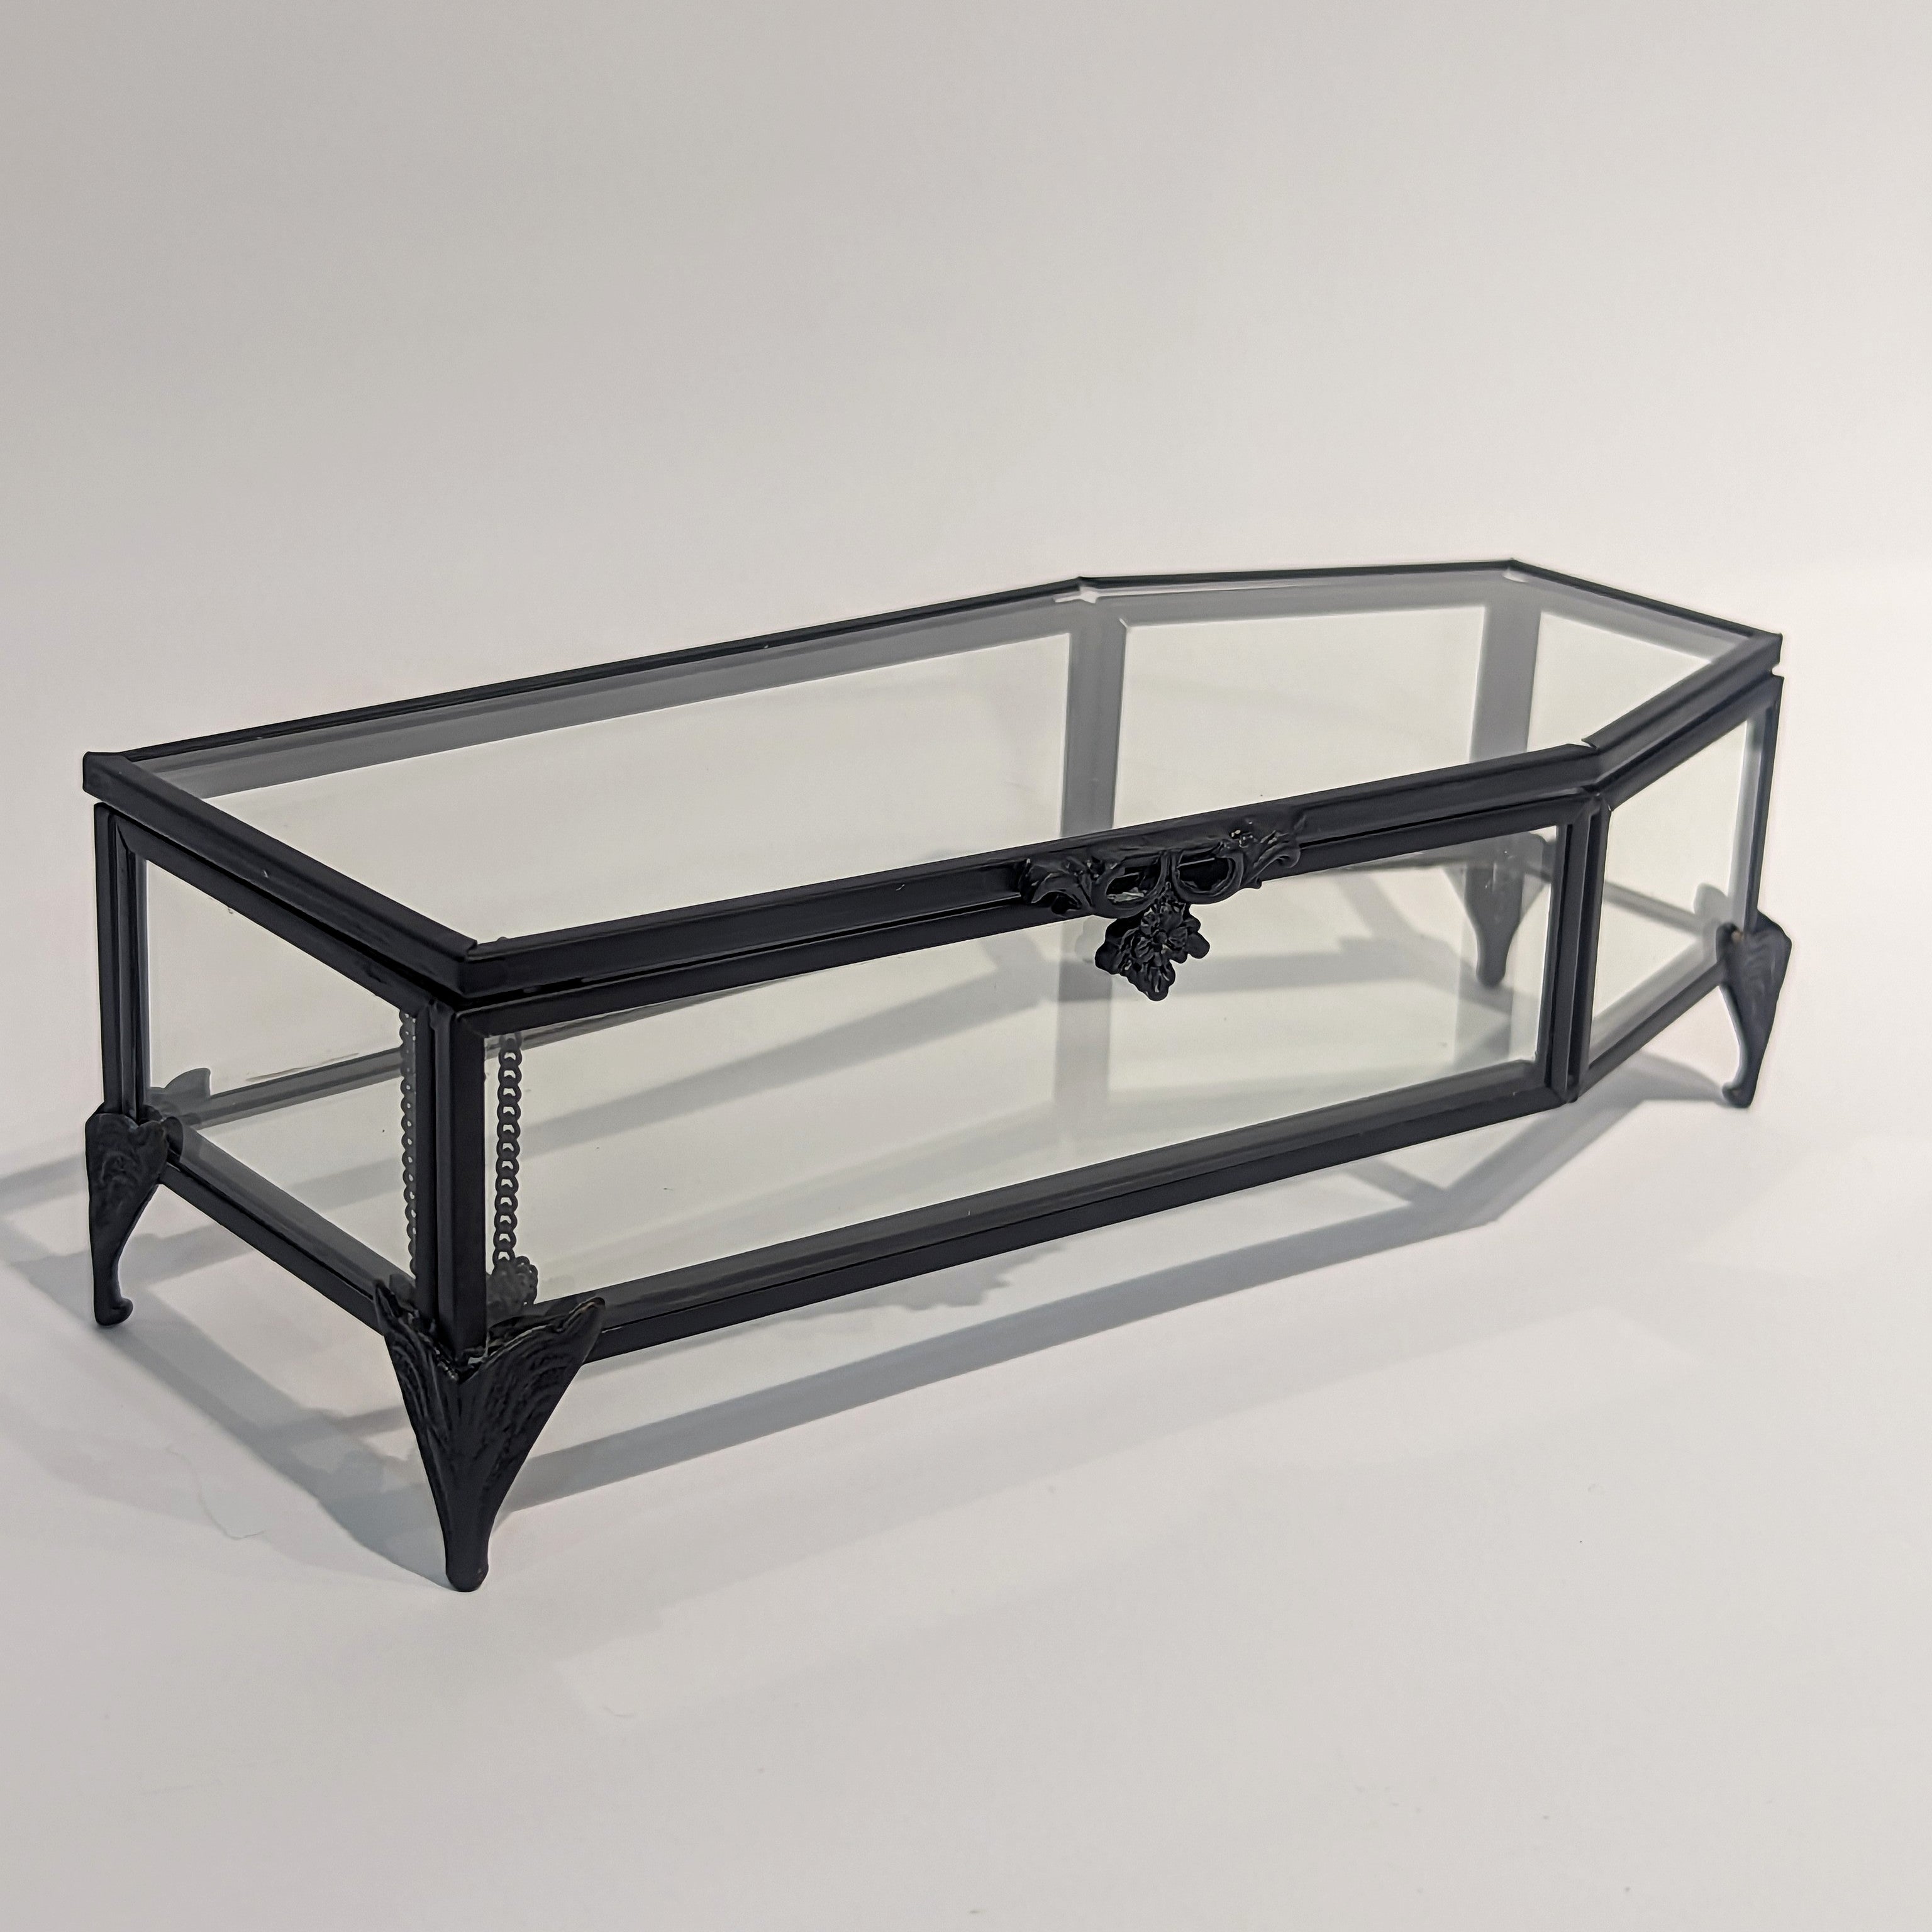 Glass Coffin Trinket Box